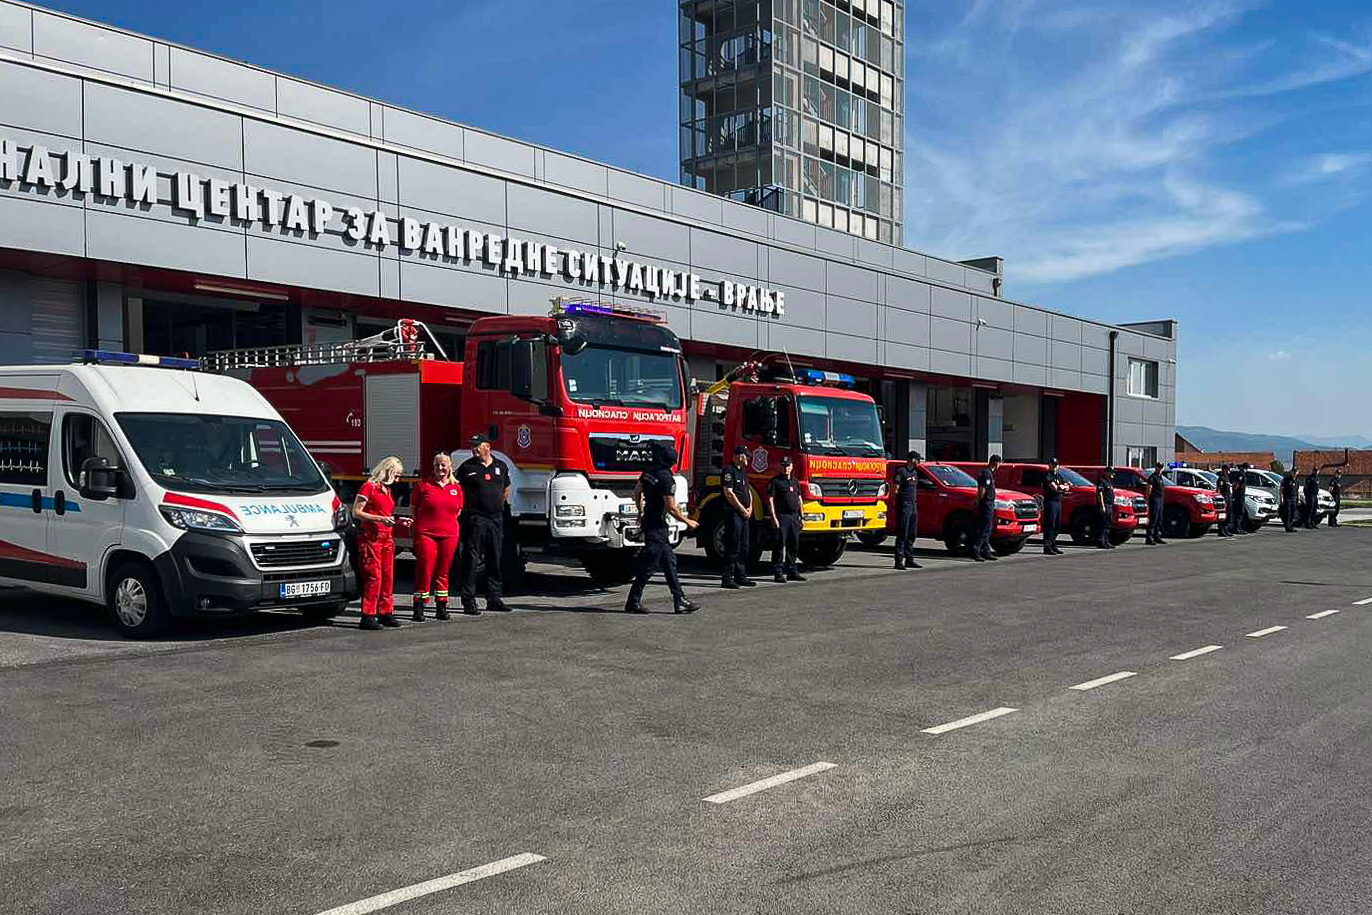 Dodatni tim srpskih vatrogasaca-spasilaca upućen u Grčku